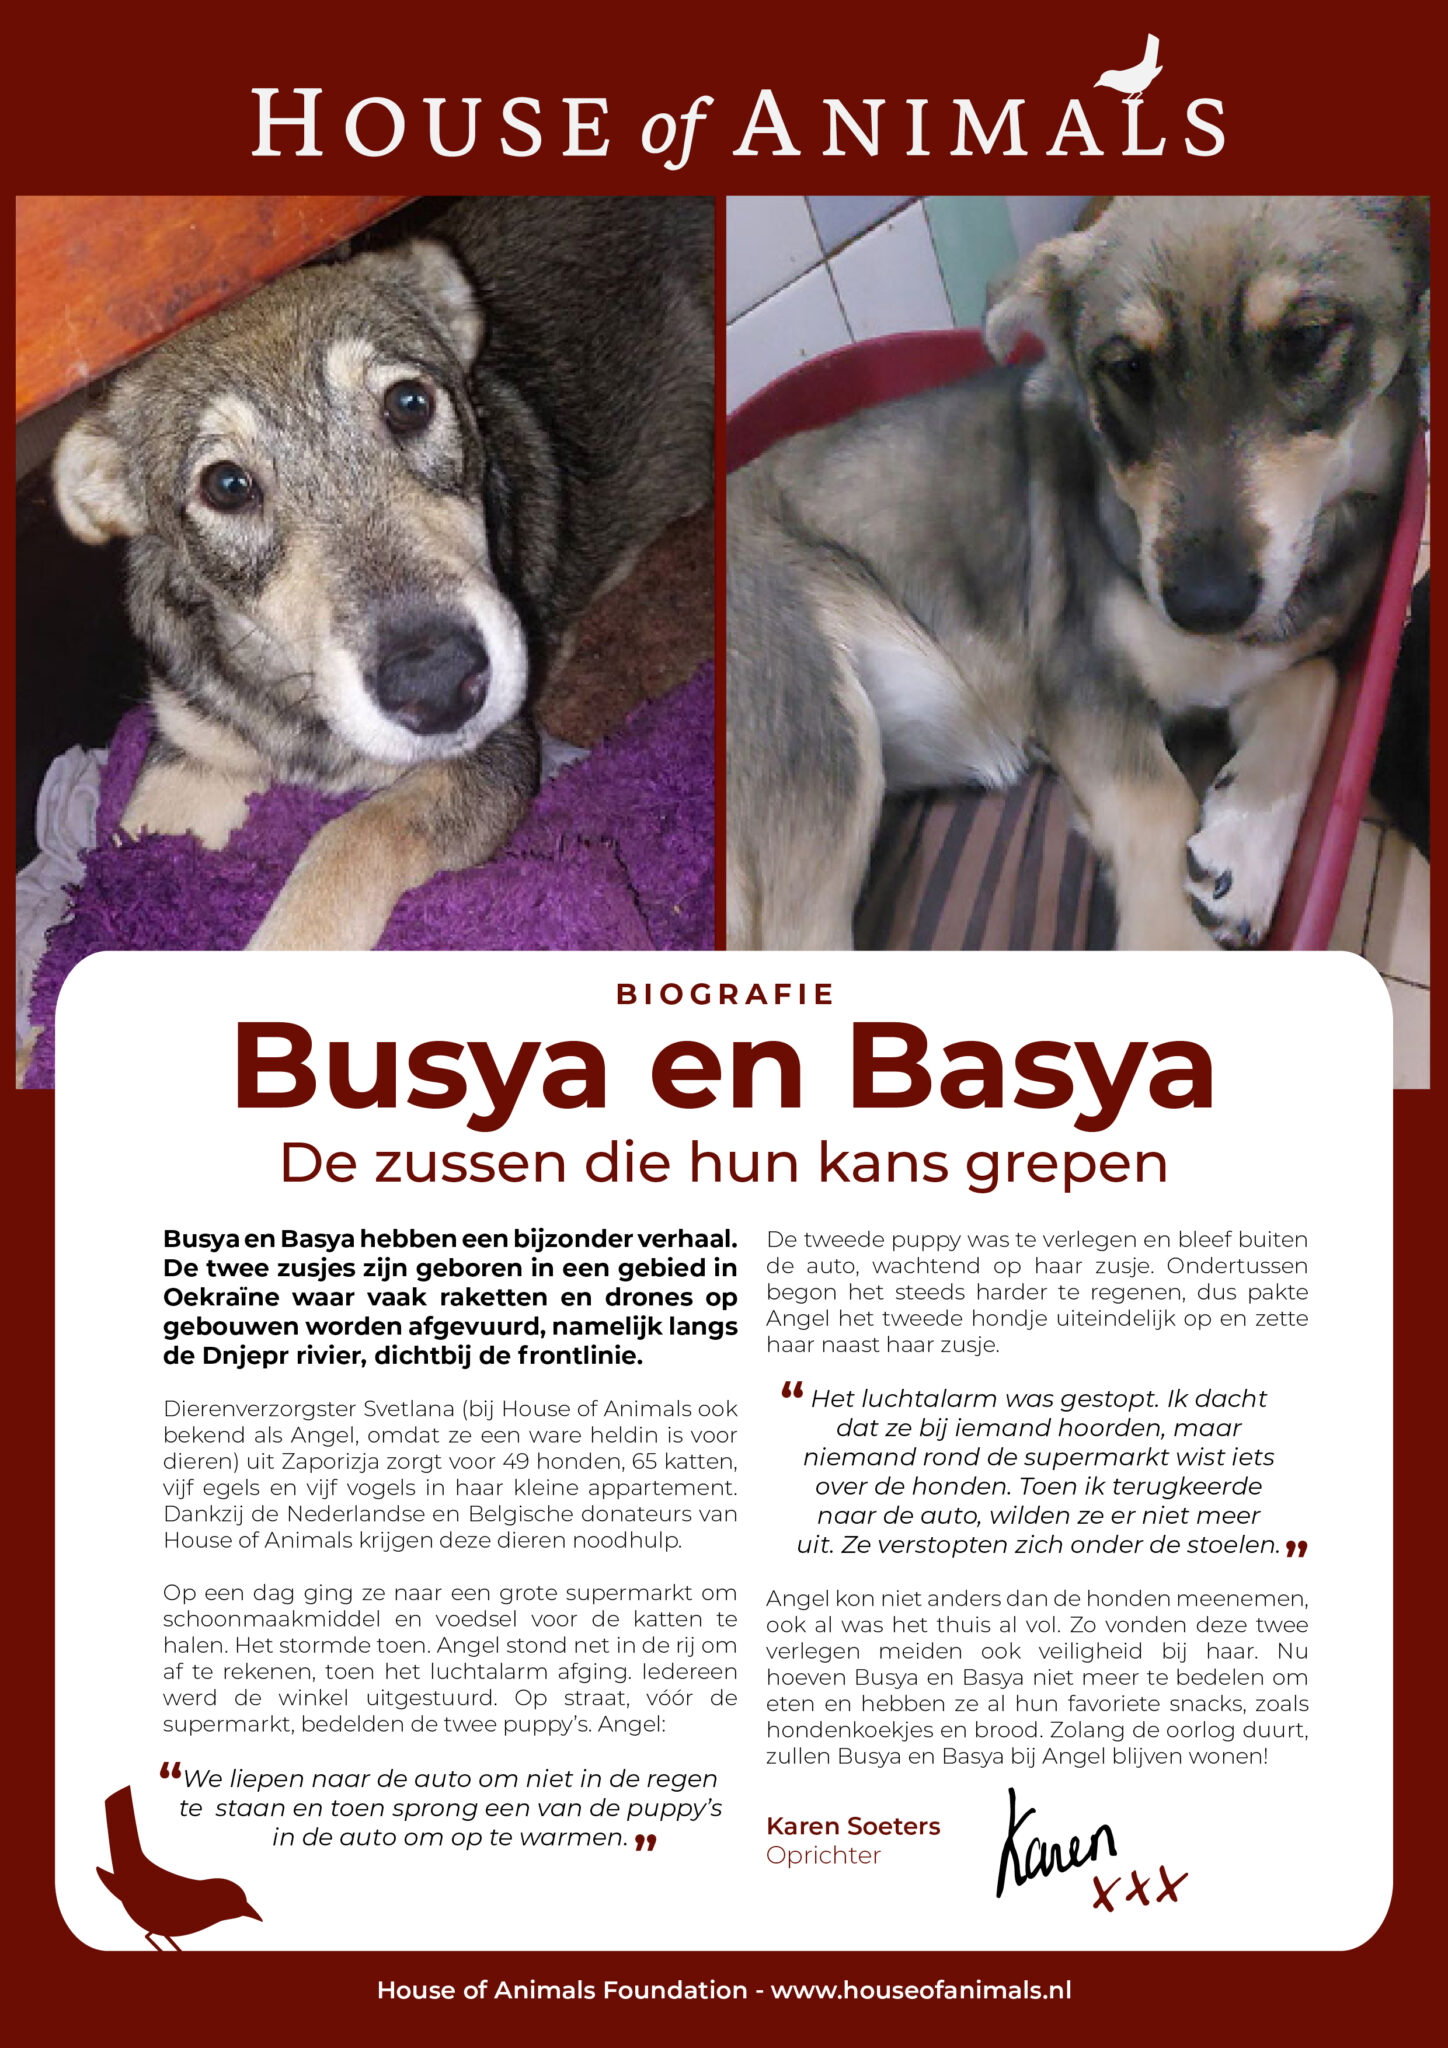 biografie Busya en Basya